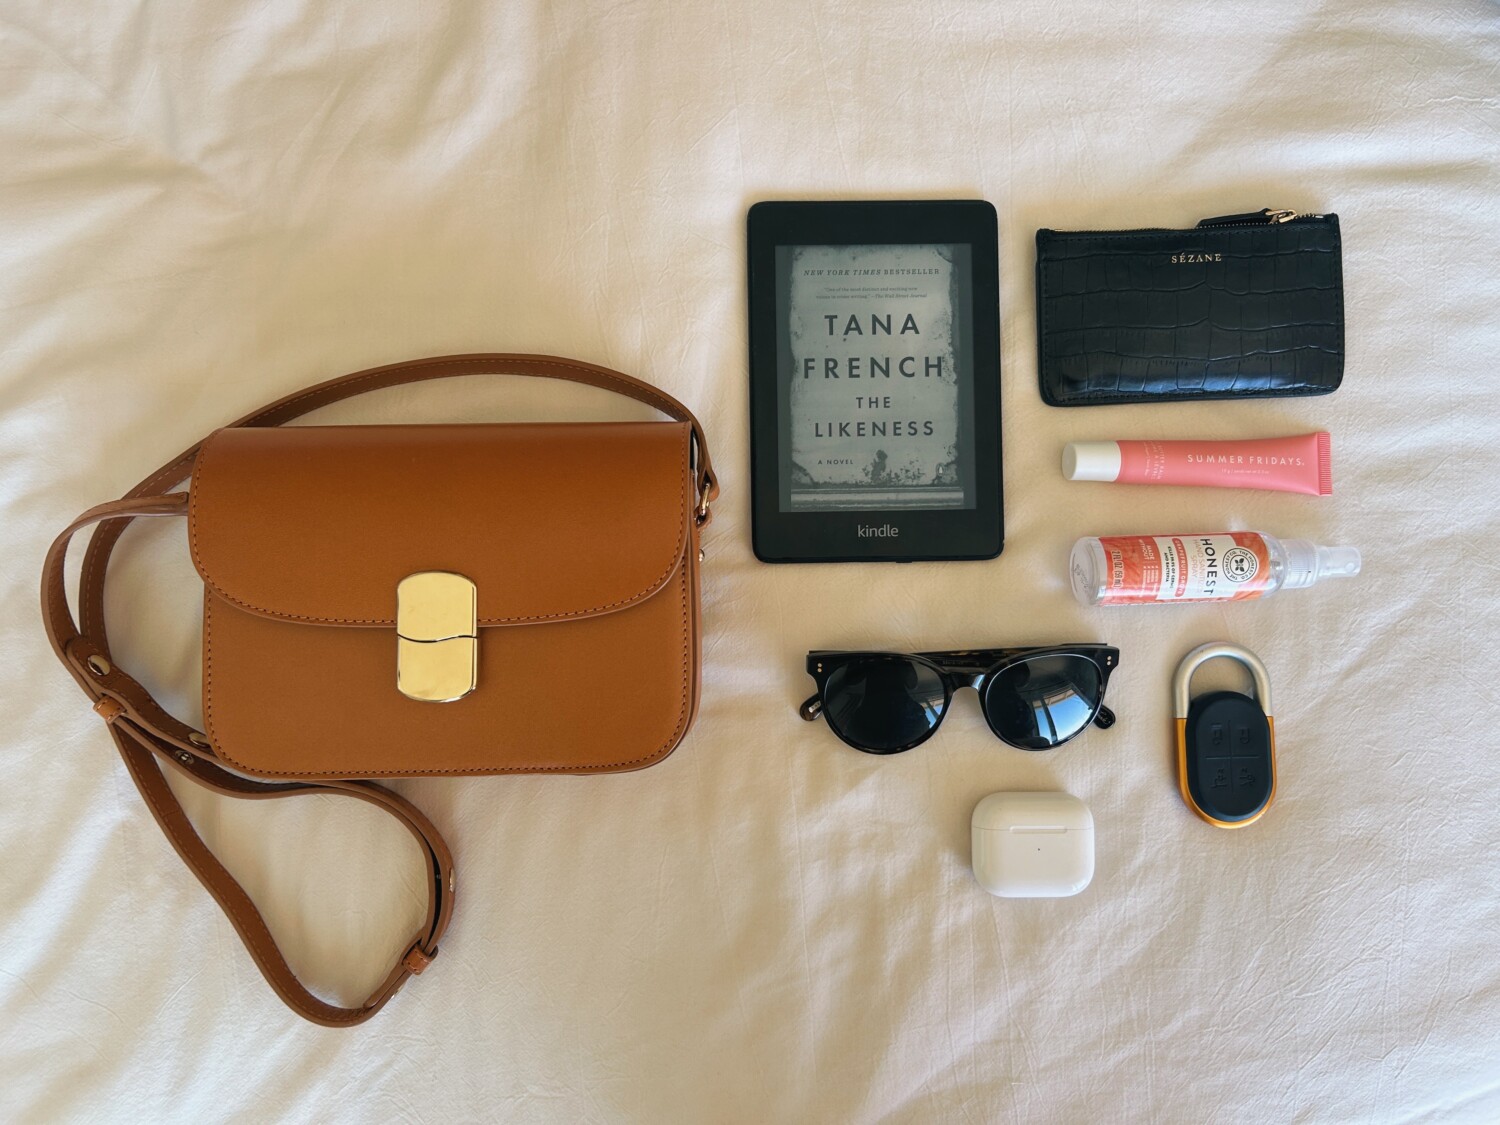 Sézane's Mini Milo bag next to a Kindle, sunglasses, card holder, lip gloss, and AirPods